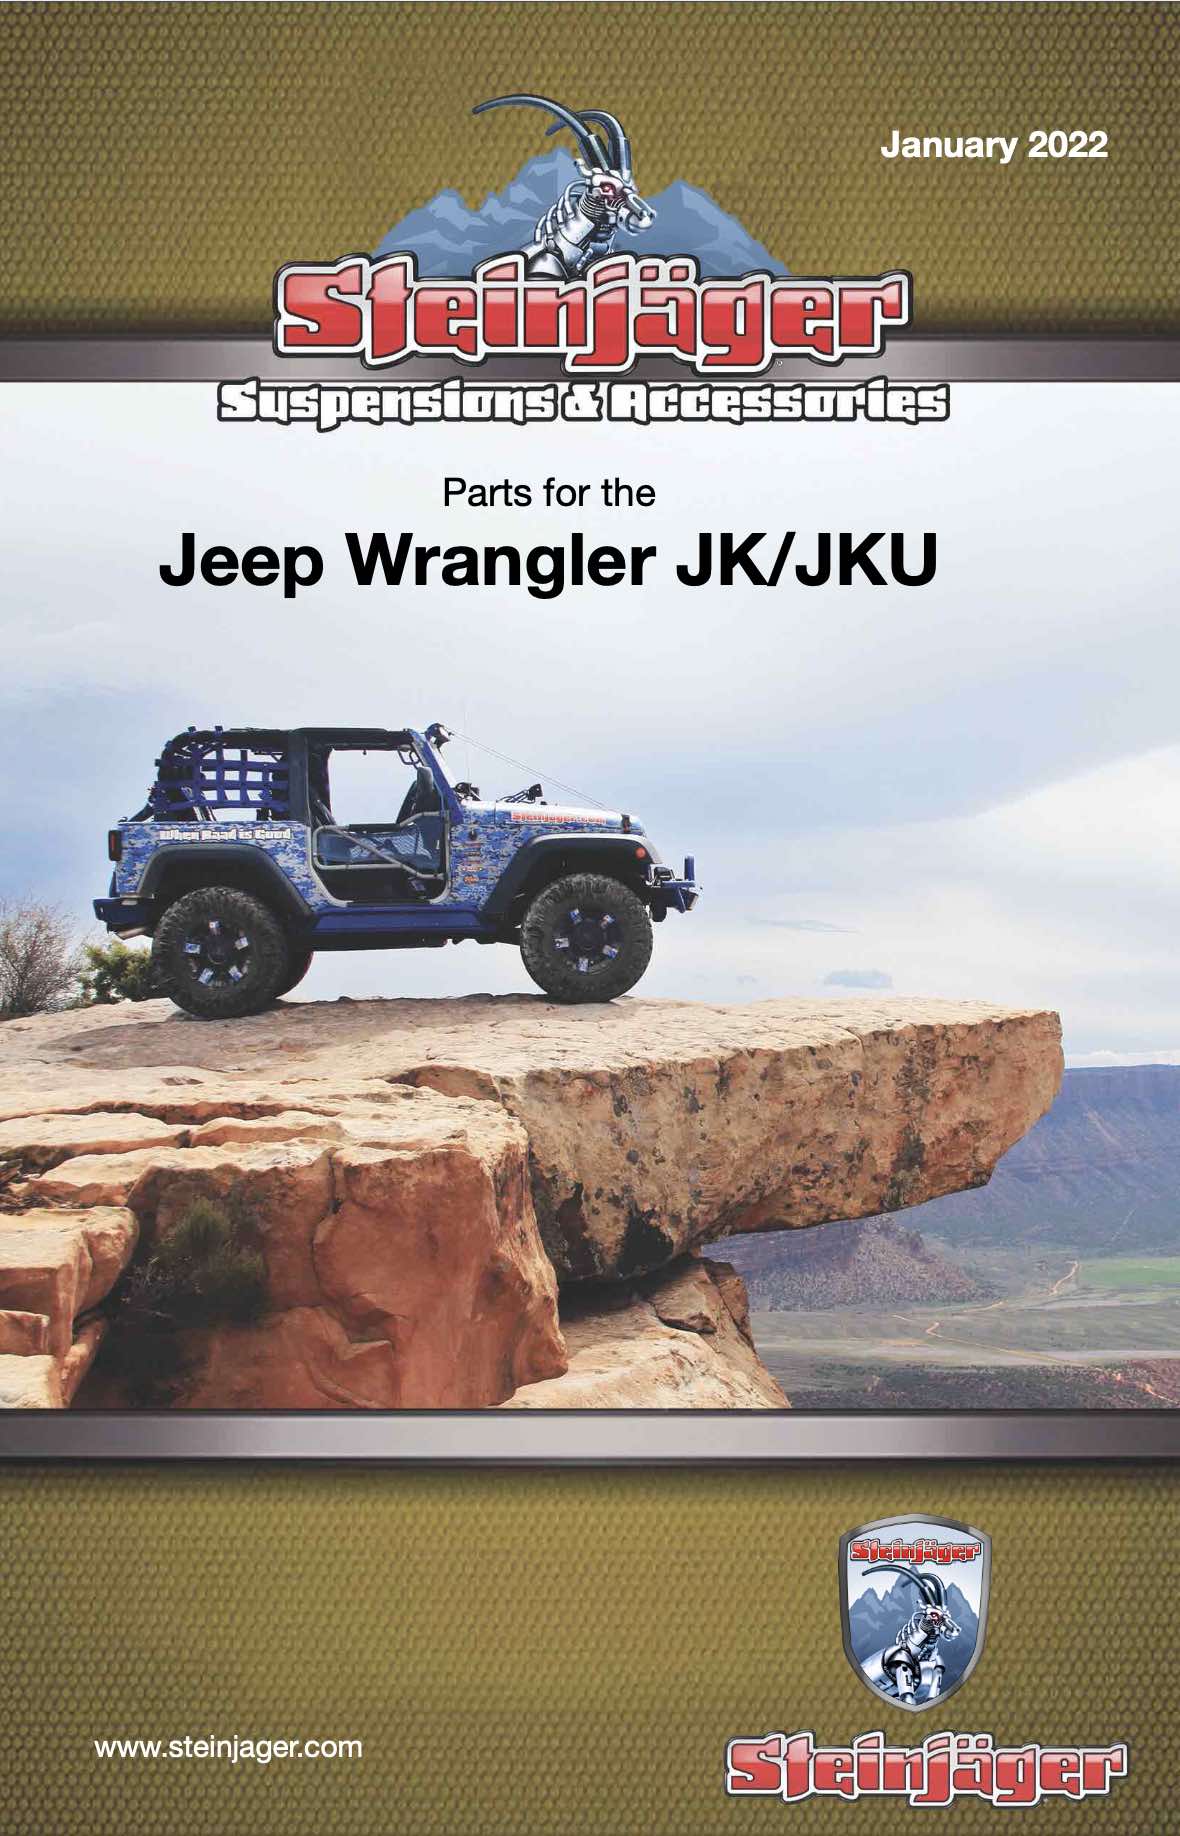 Catalog for Jeep Wrangler JK and JKU